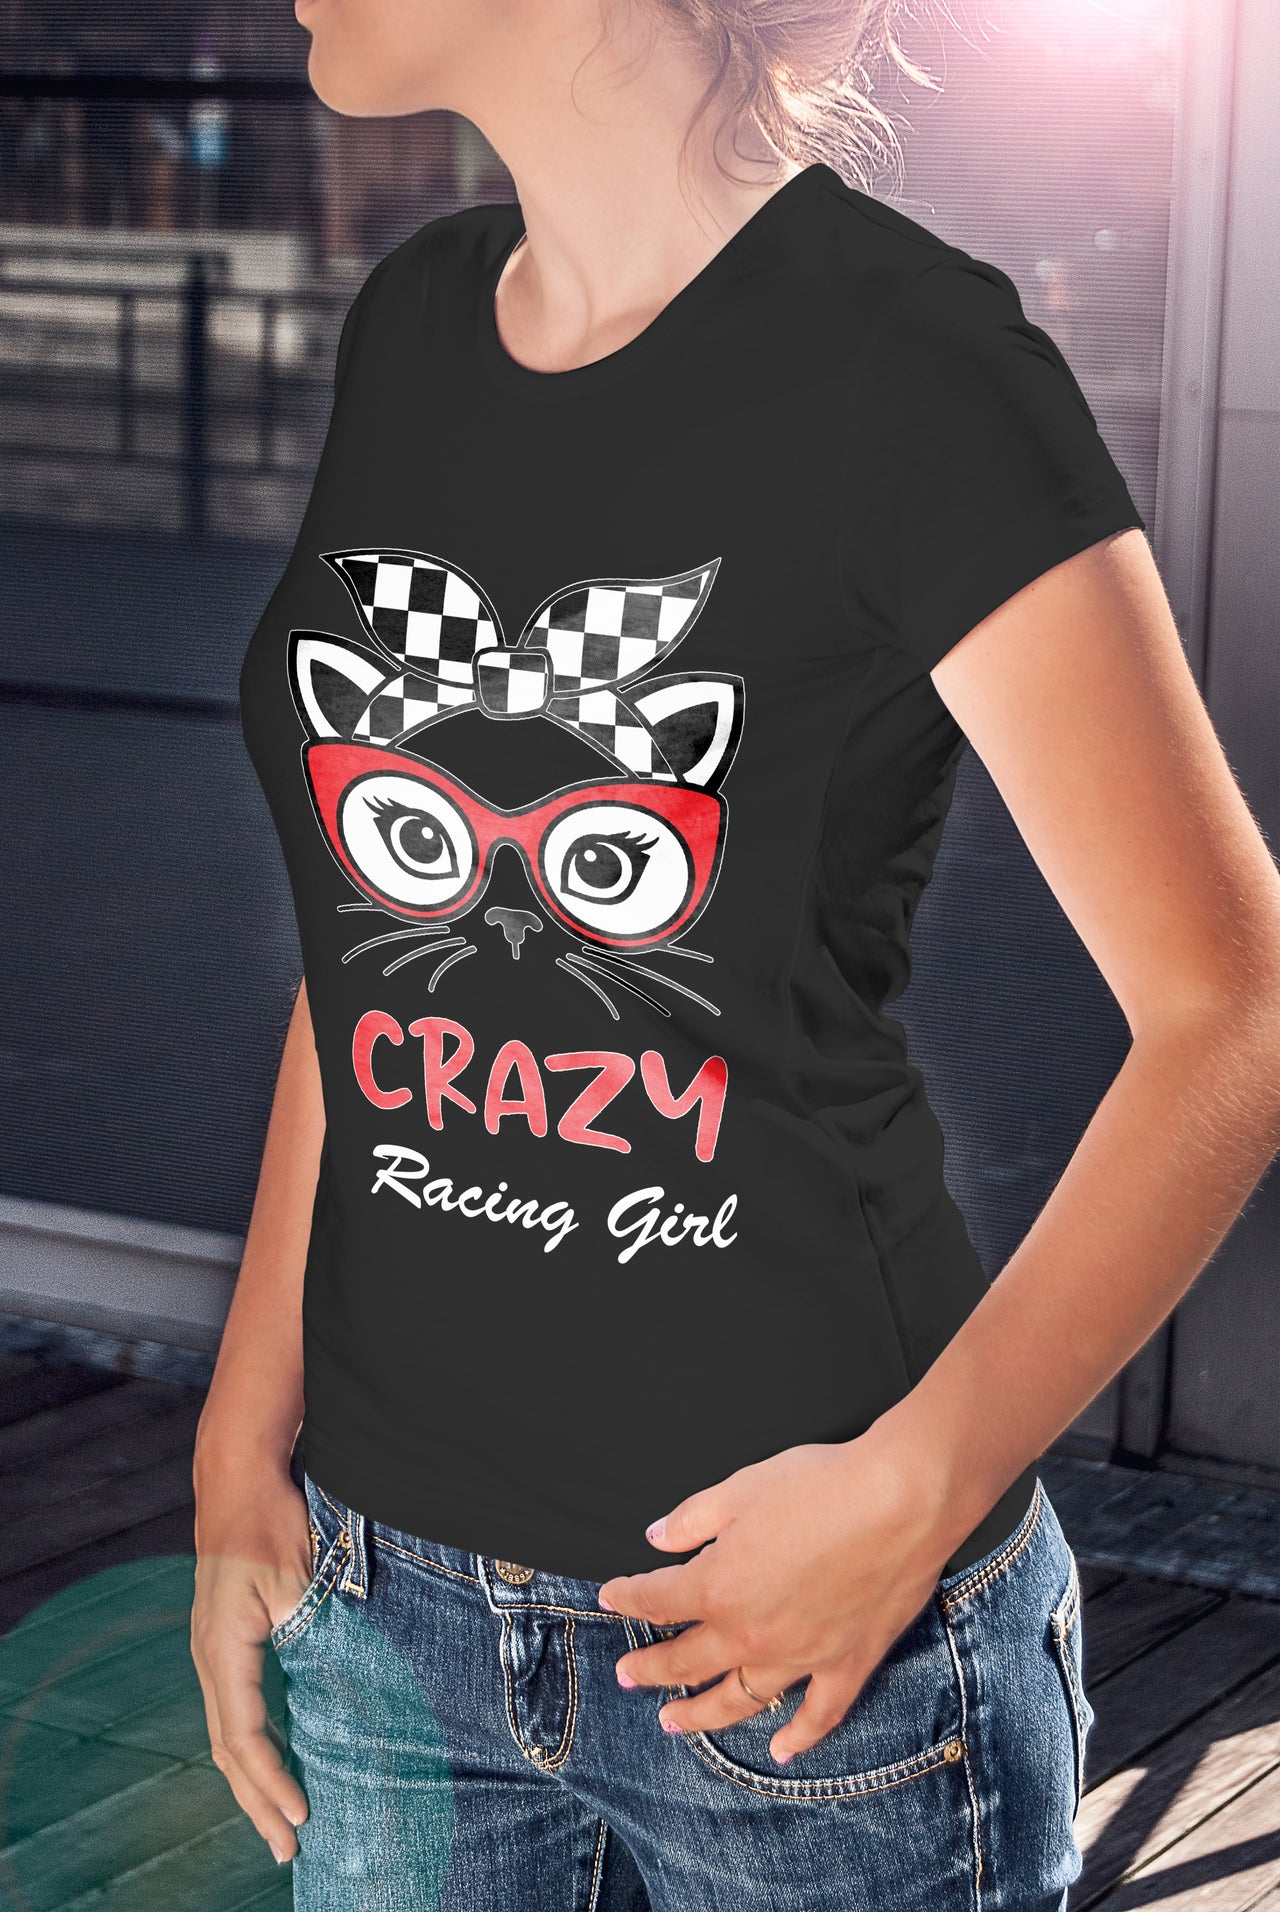 Cute Crazy racing T-shirts